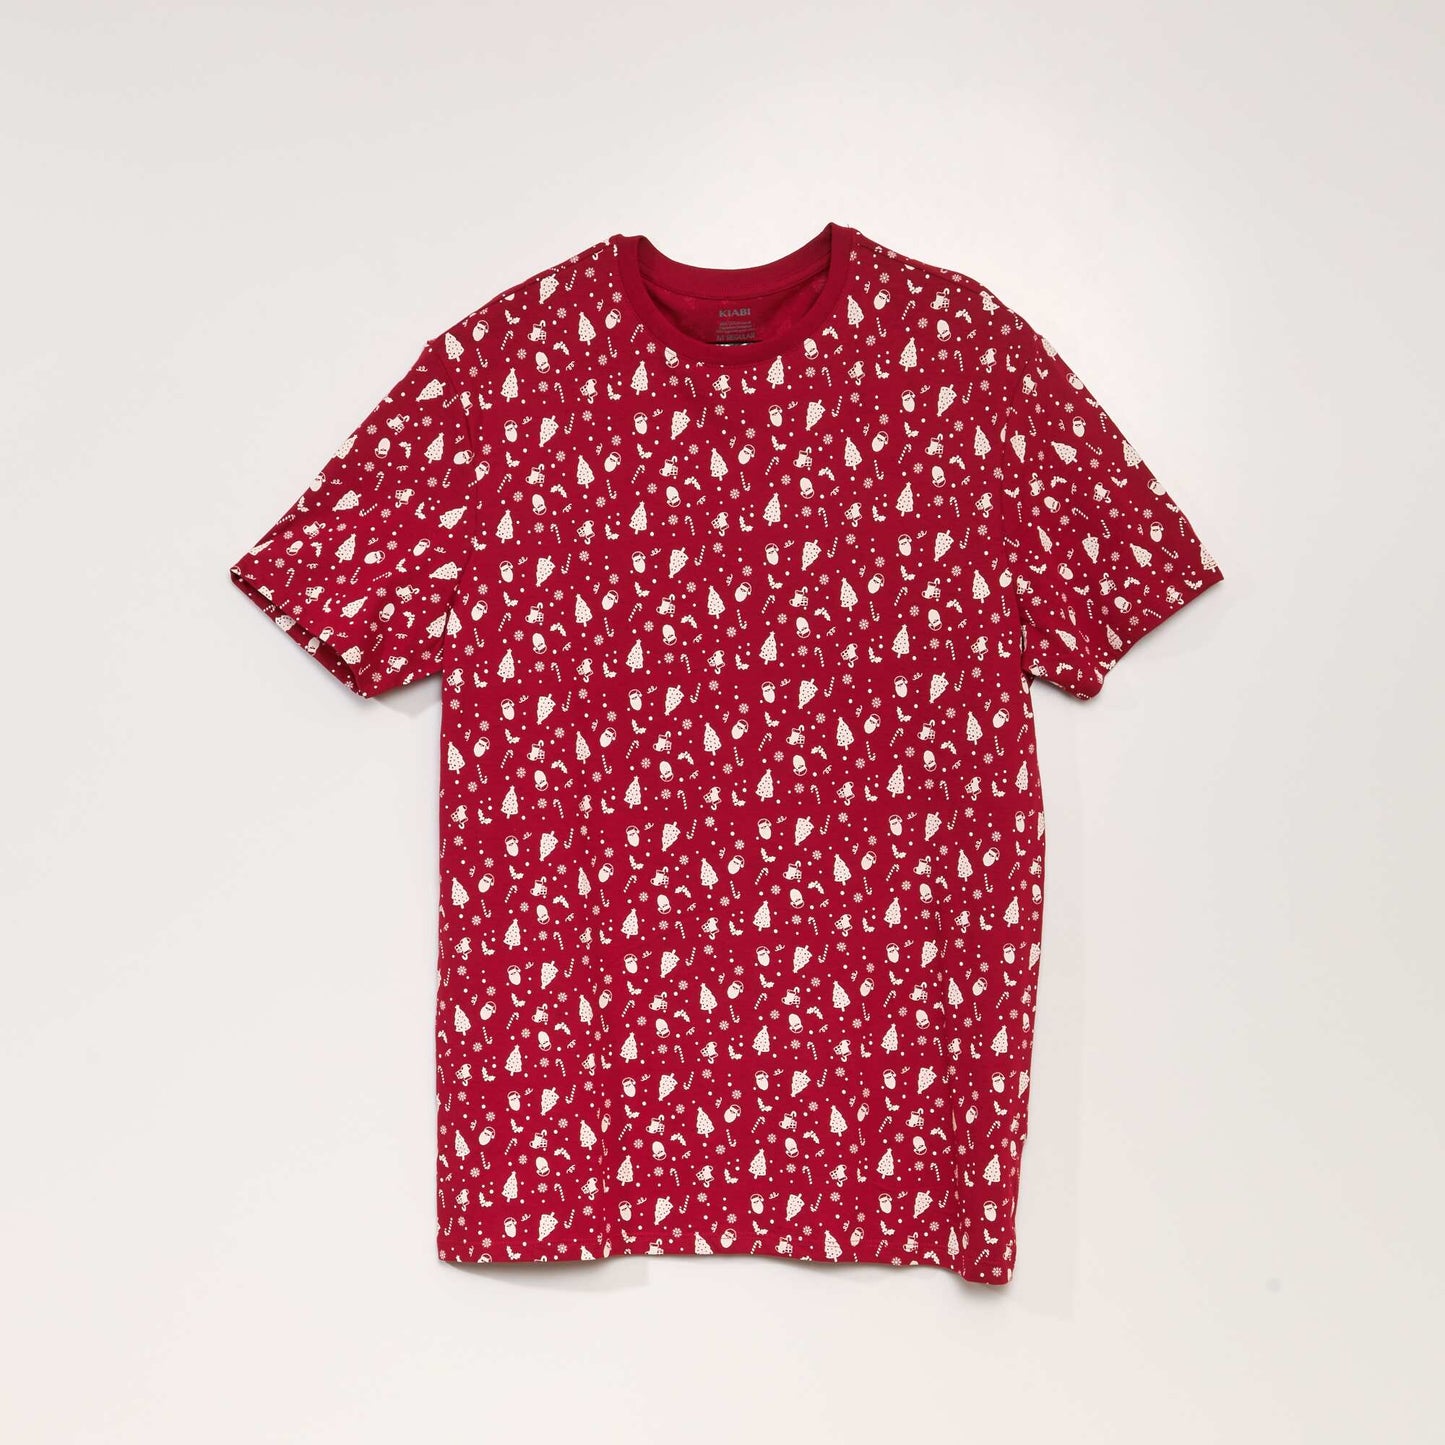 Tee-shirt manches courtes imprimé Noël Rouge all over